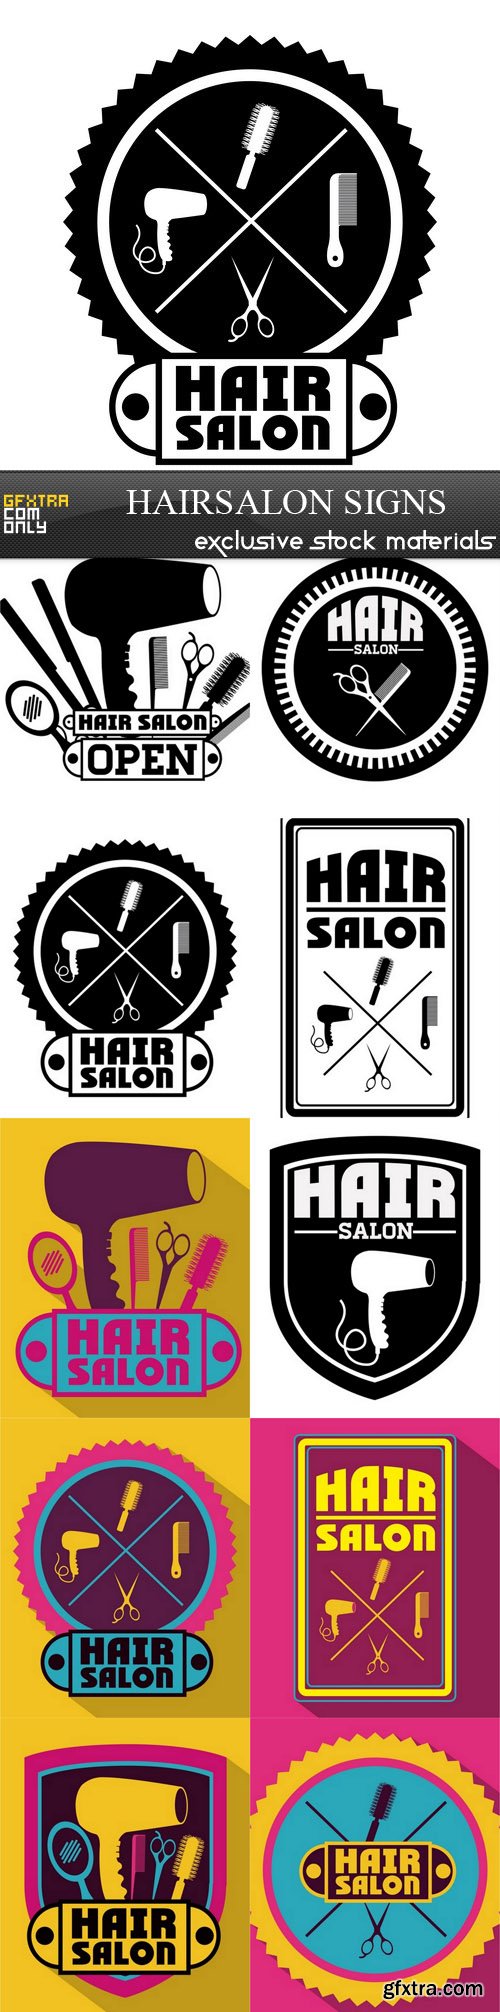 Hairsalon signs 0